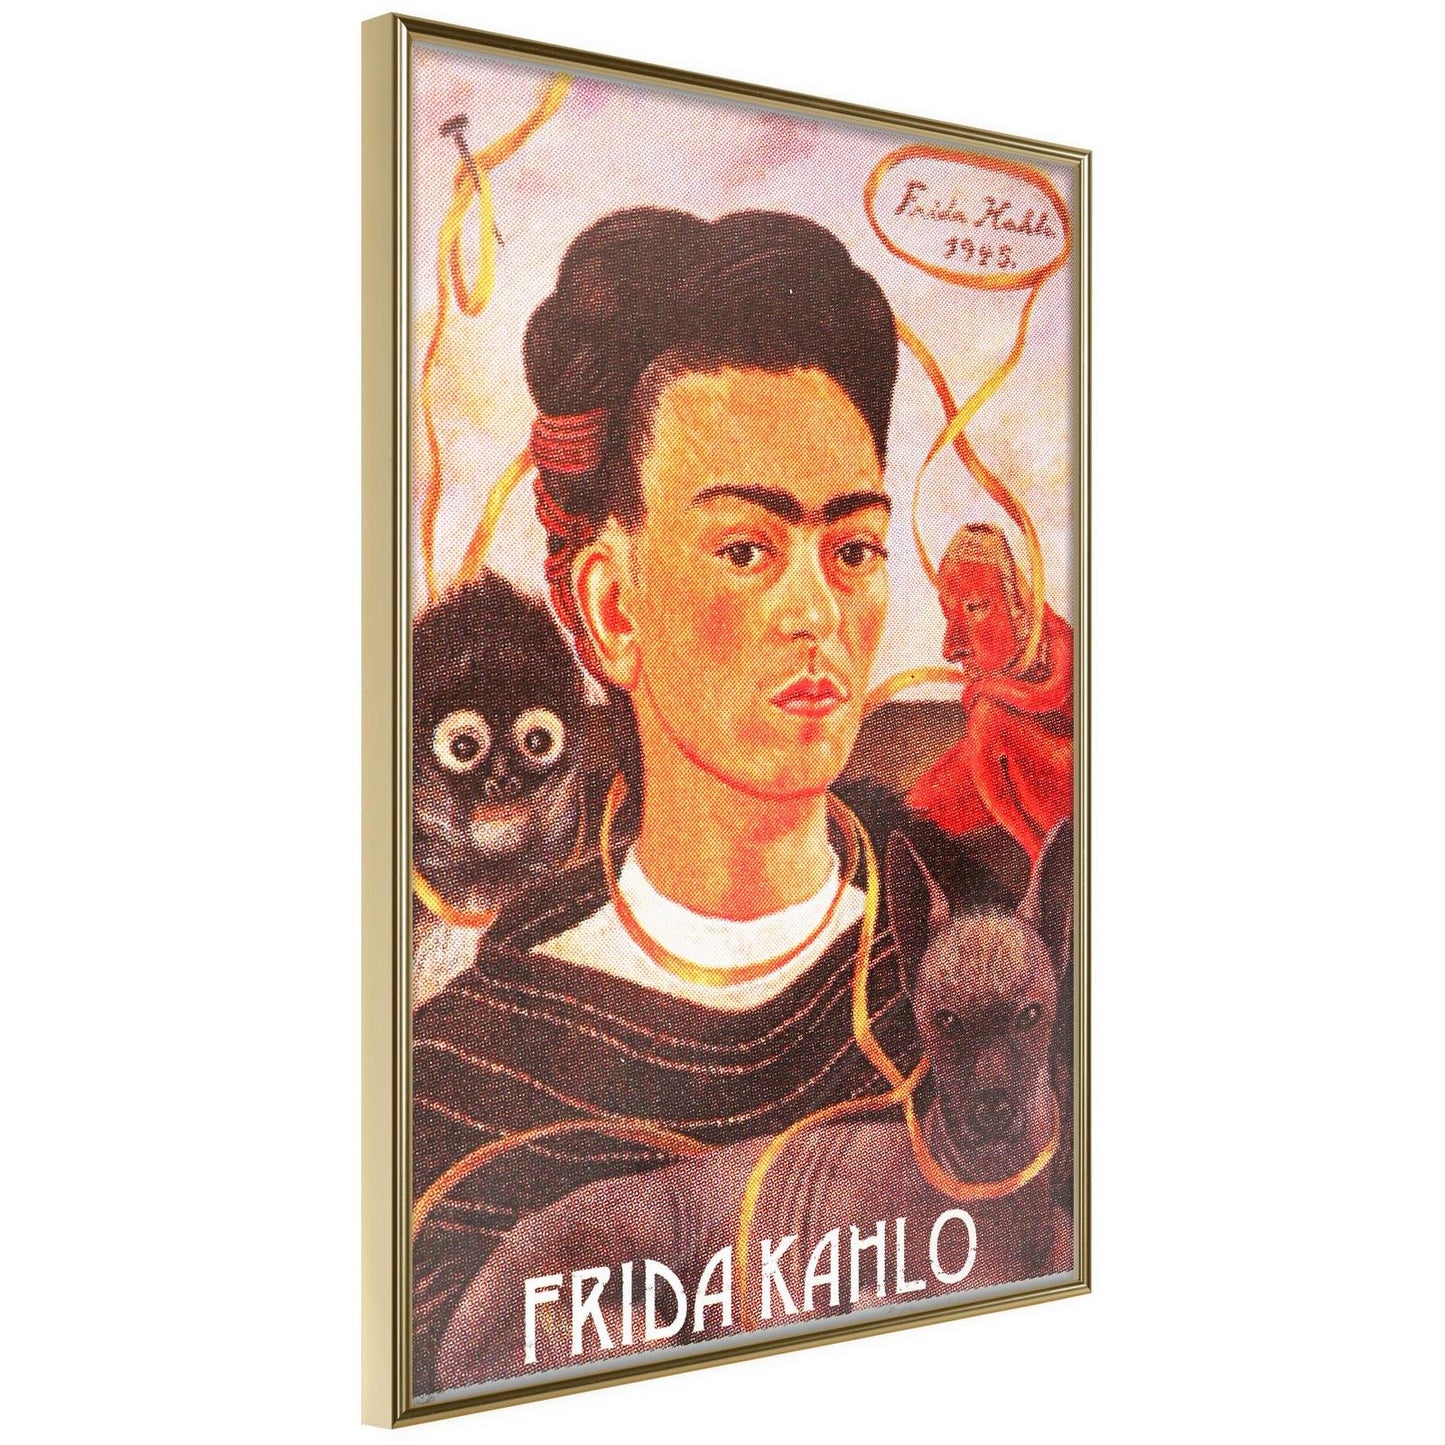 Frida Khalo – Selbstporträt